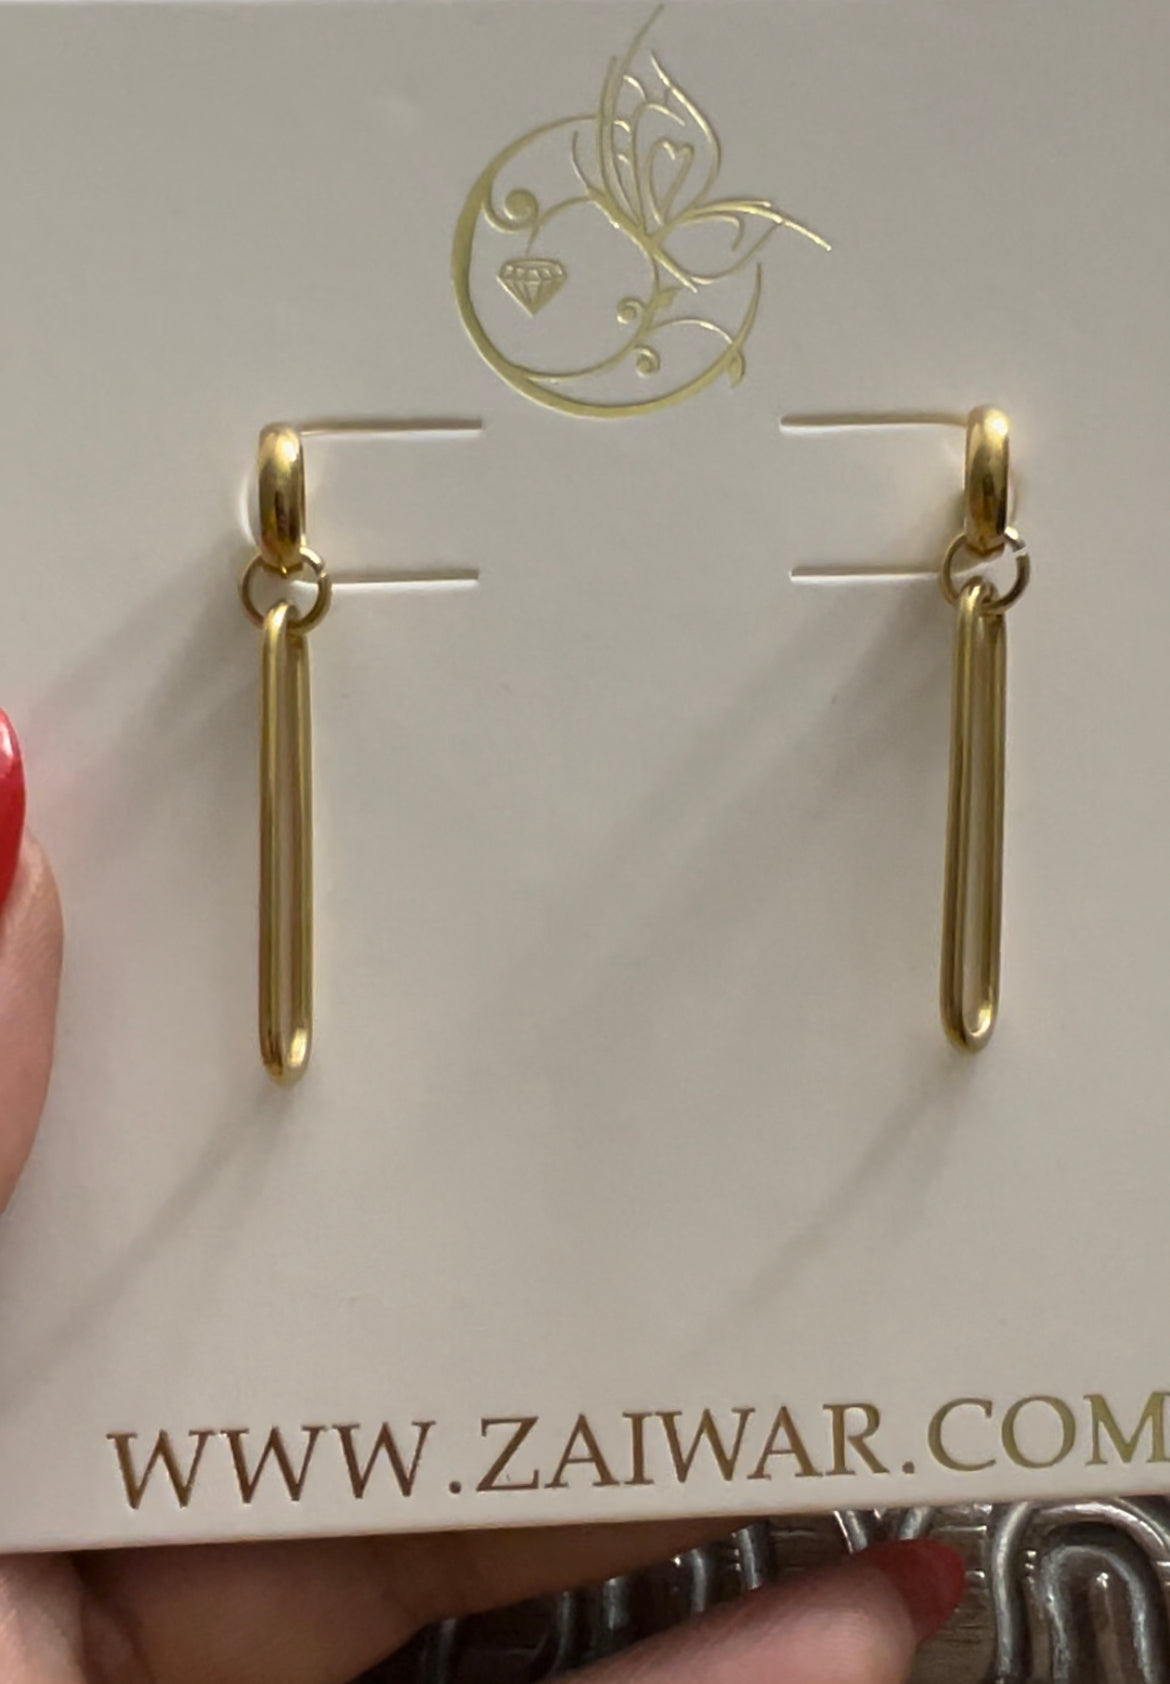 Minimalist Gold Plated Earrings